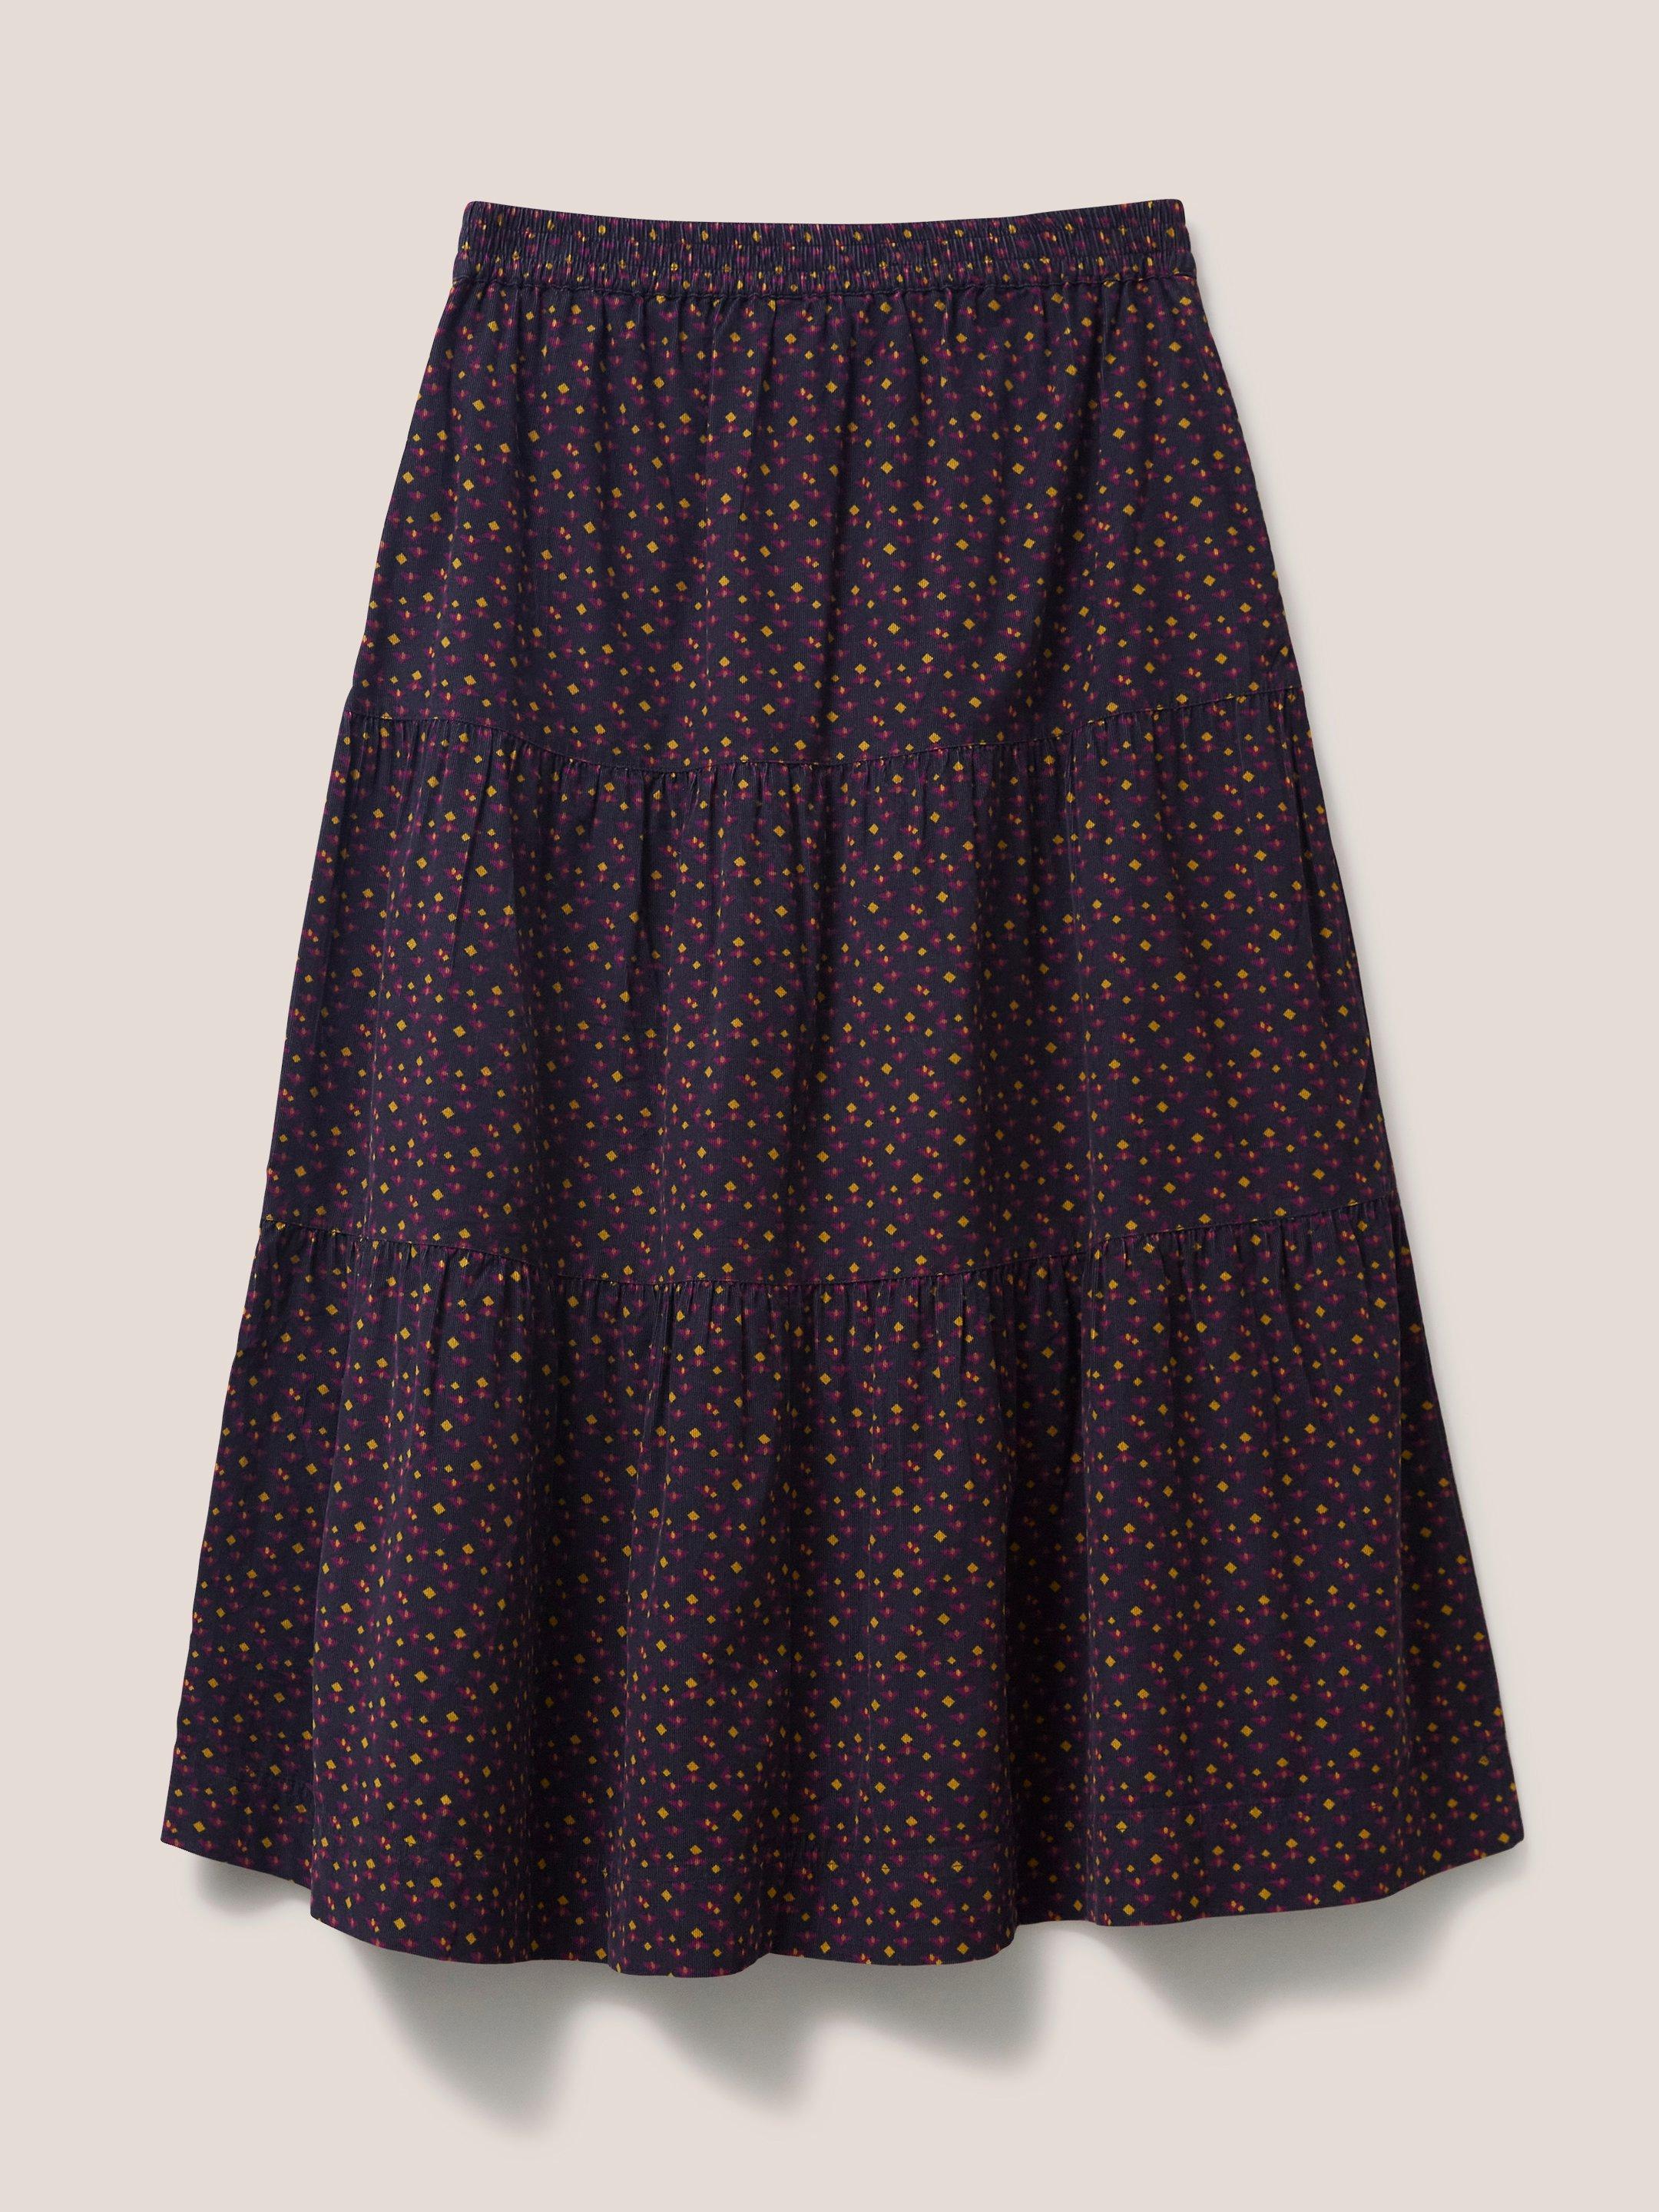 Jade Cord Tiered Skirt in GREY MULTI - FLAT BACK